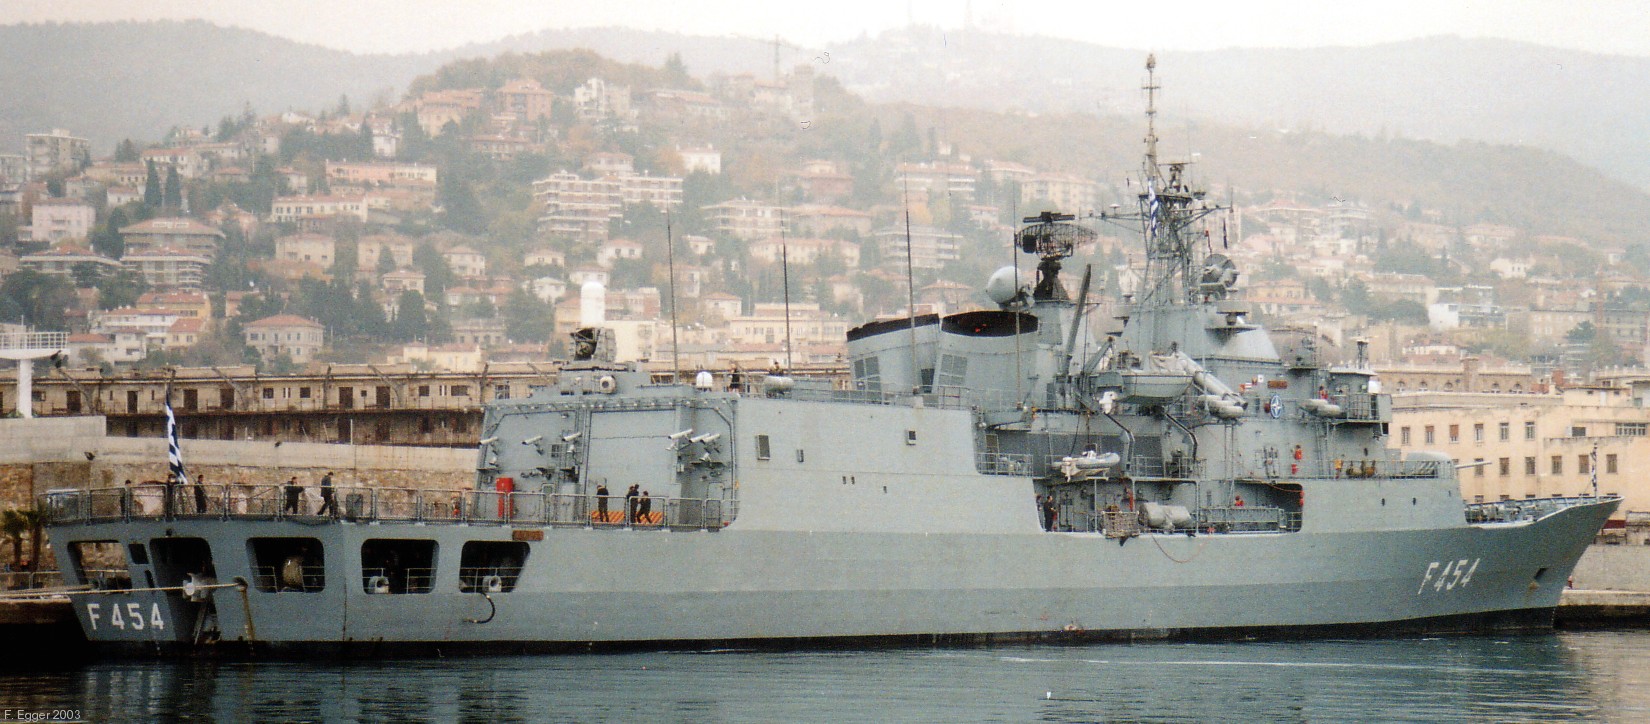 f 454 hs psara hydra class frigate meko-200hn hellenic navy greece nato standing naval force mediterranean stanavformed trieste italy 2003 05